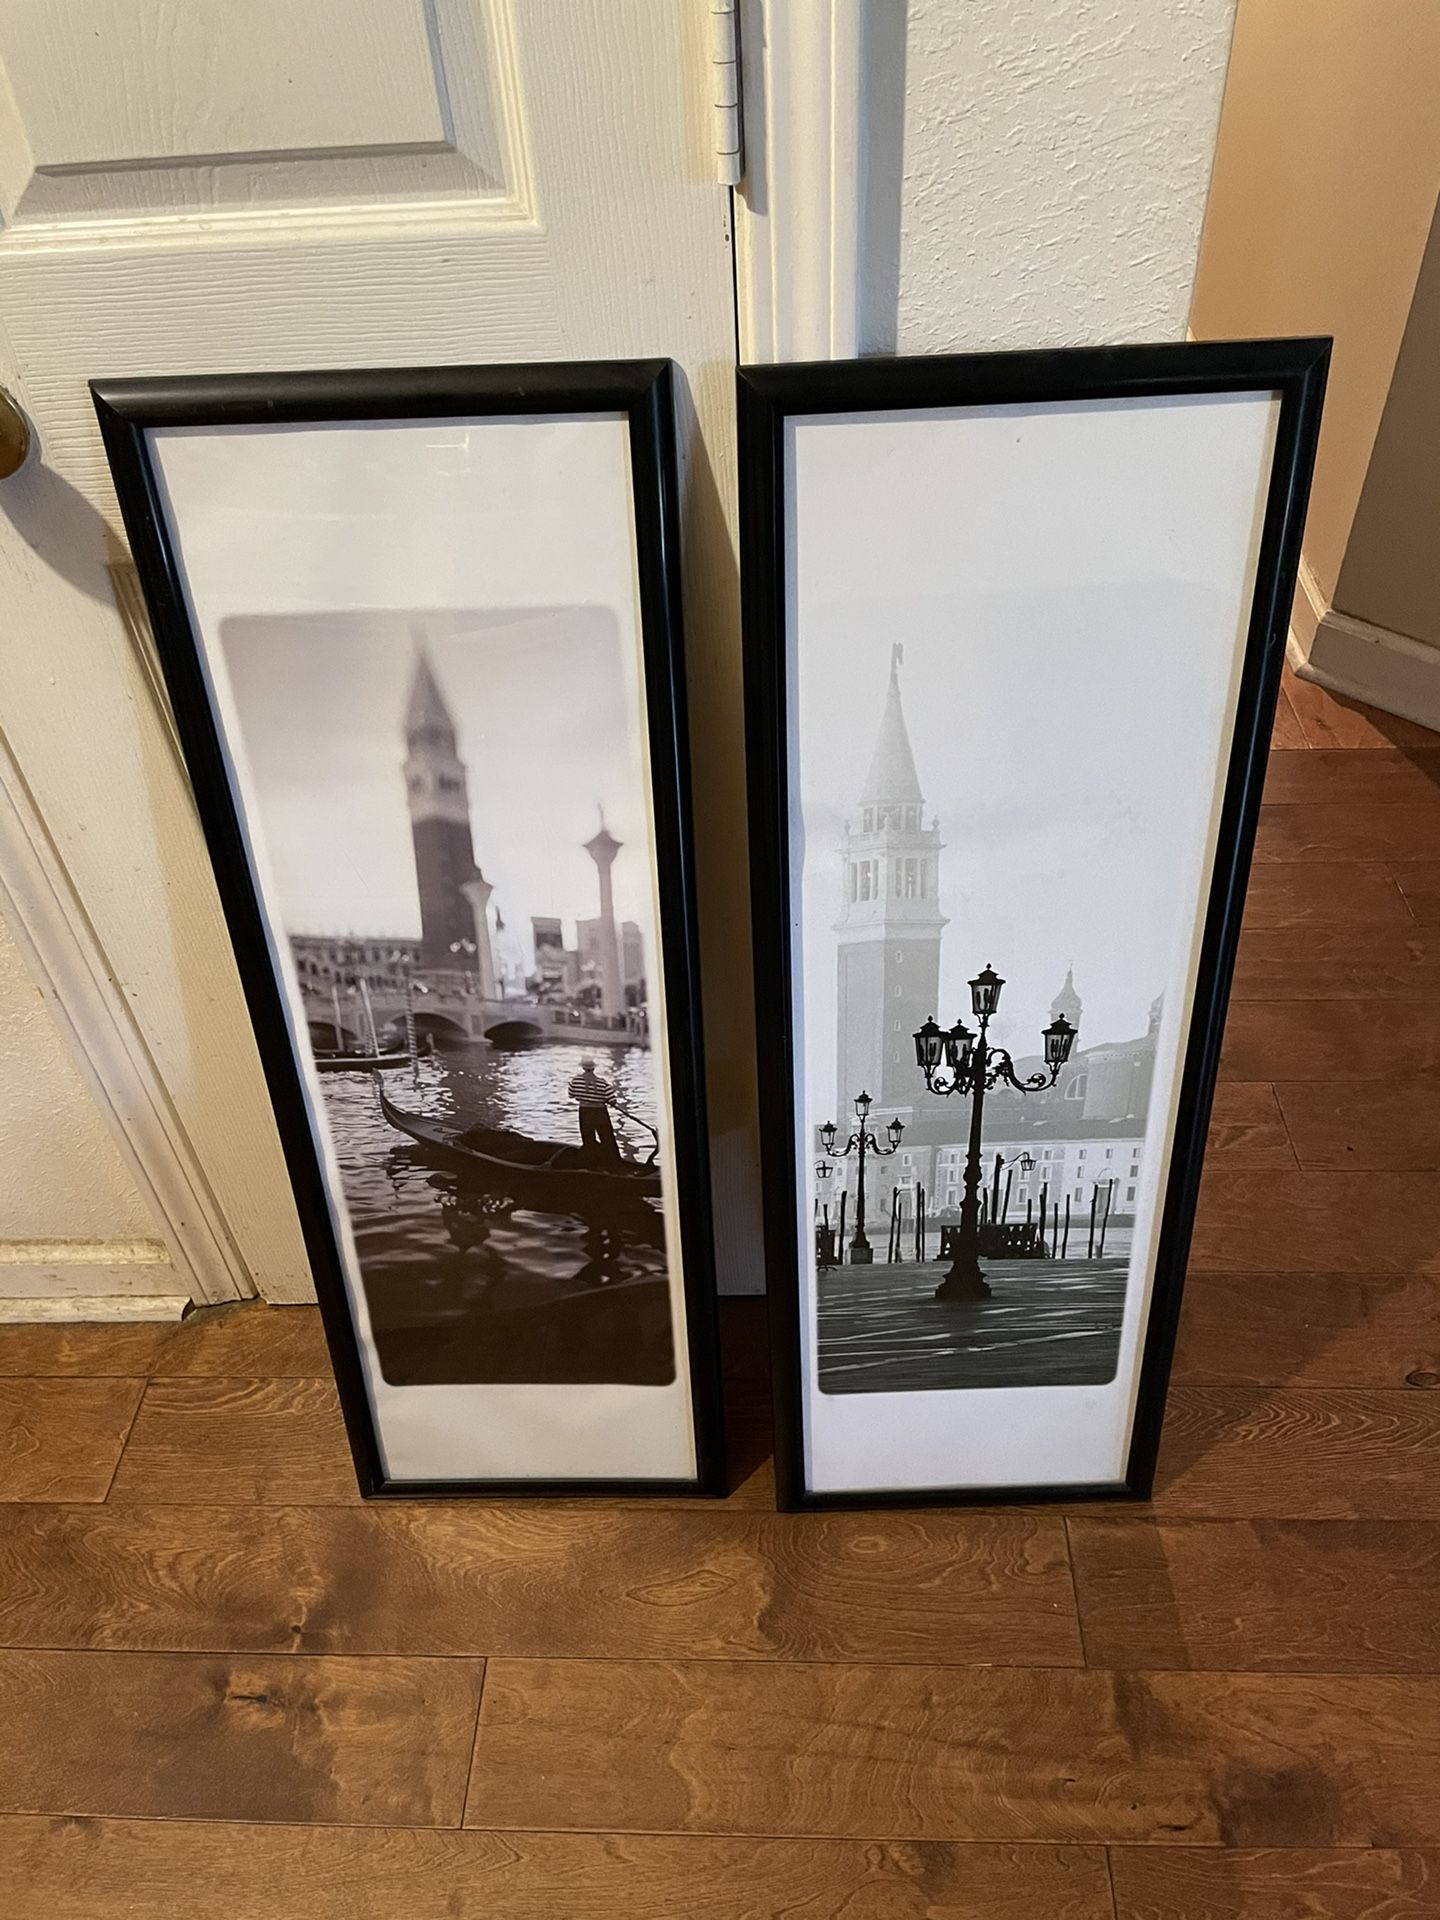 Pair of framed city photographs of Venice / Venezia